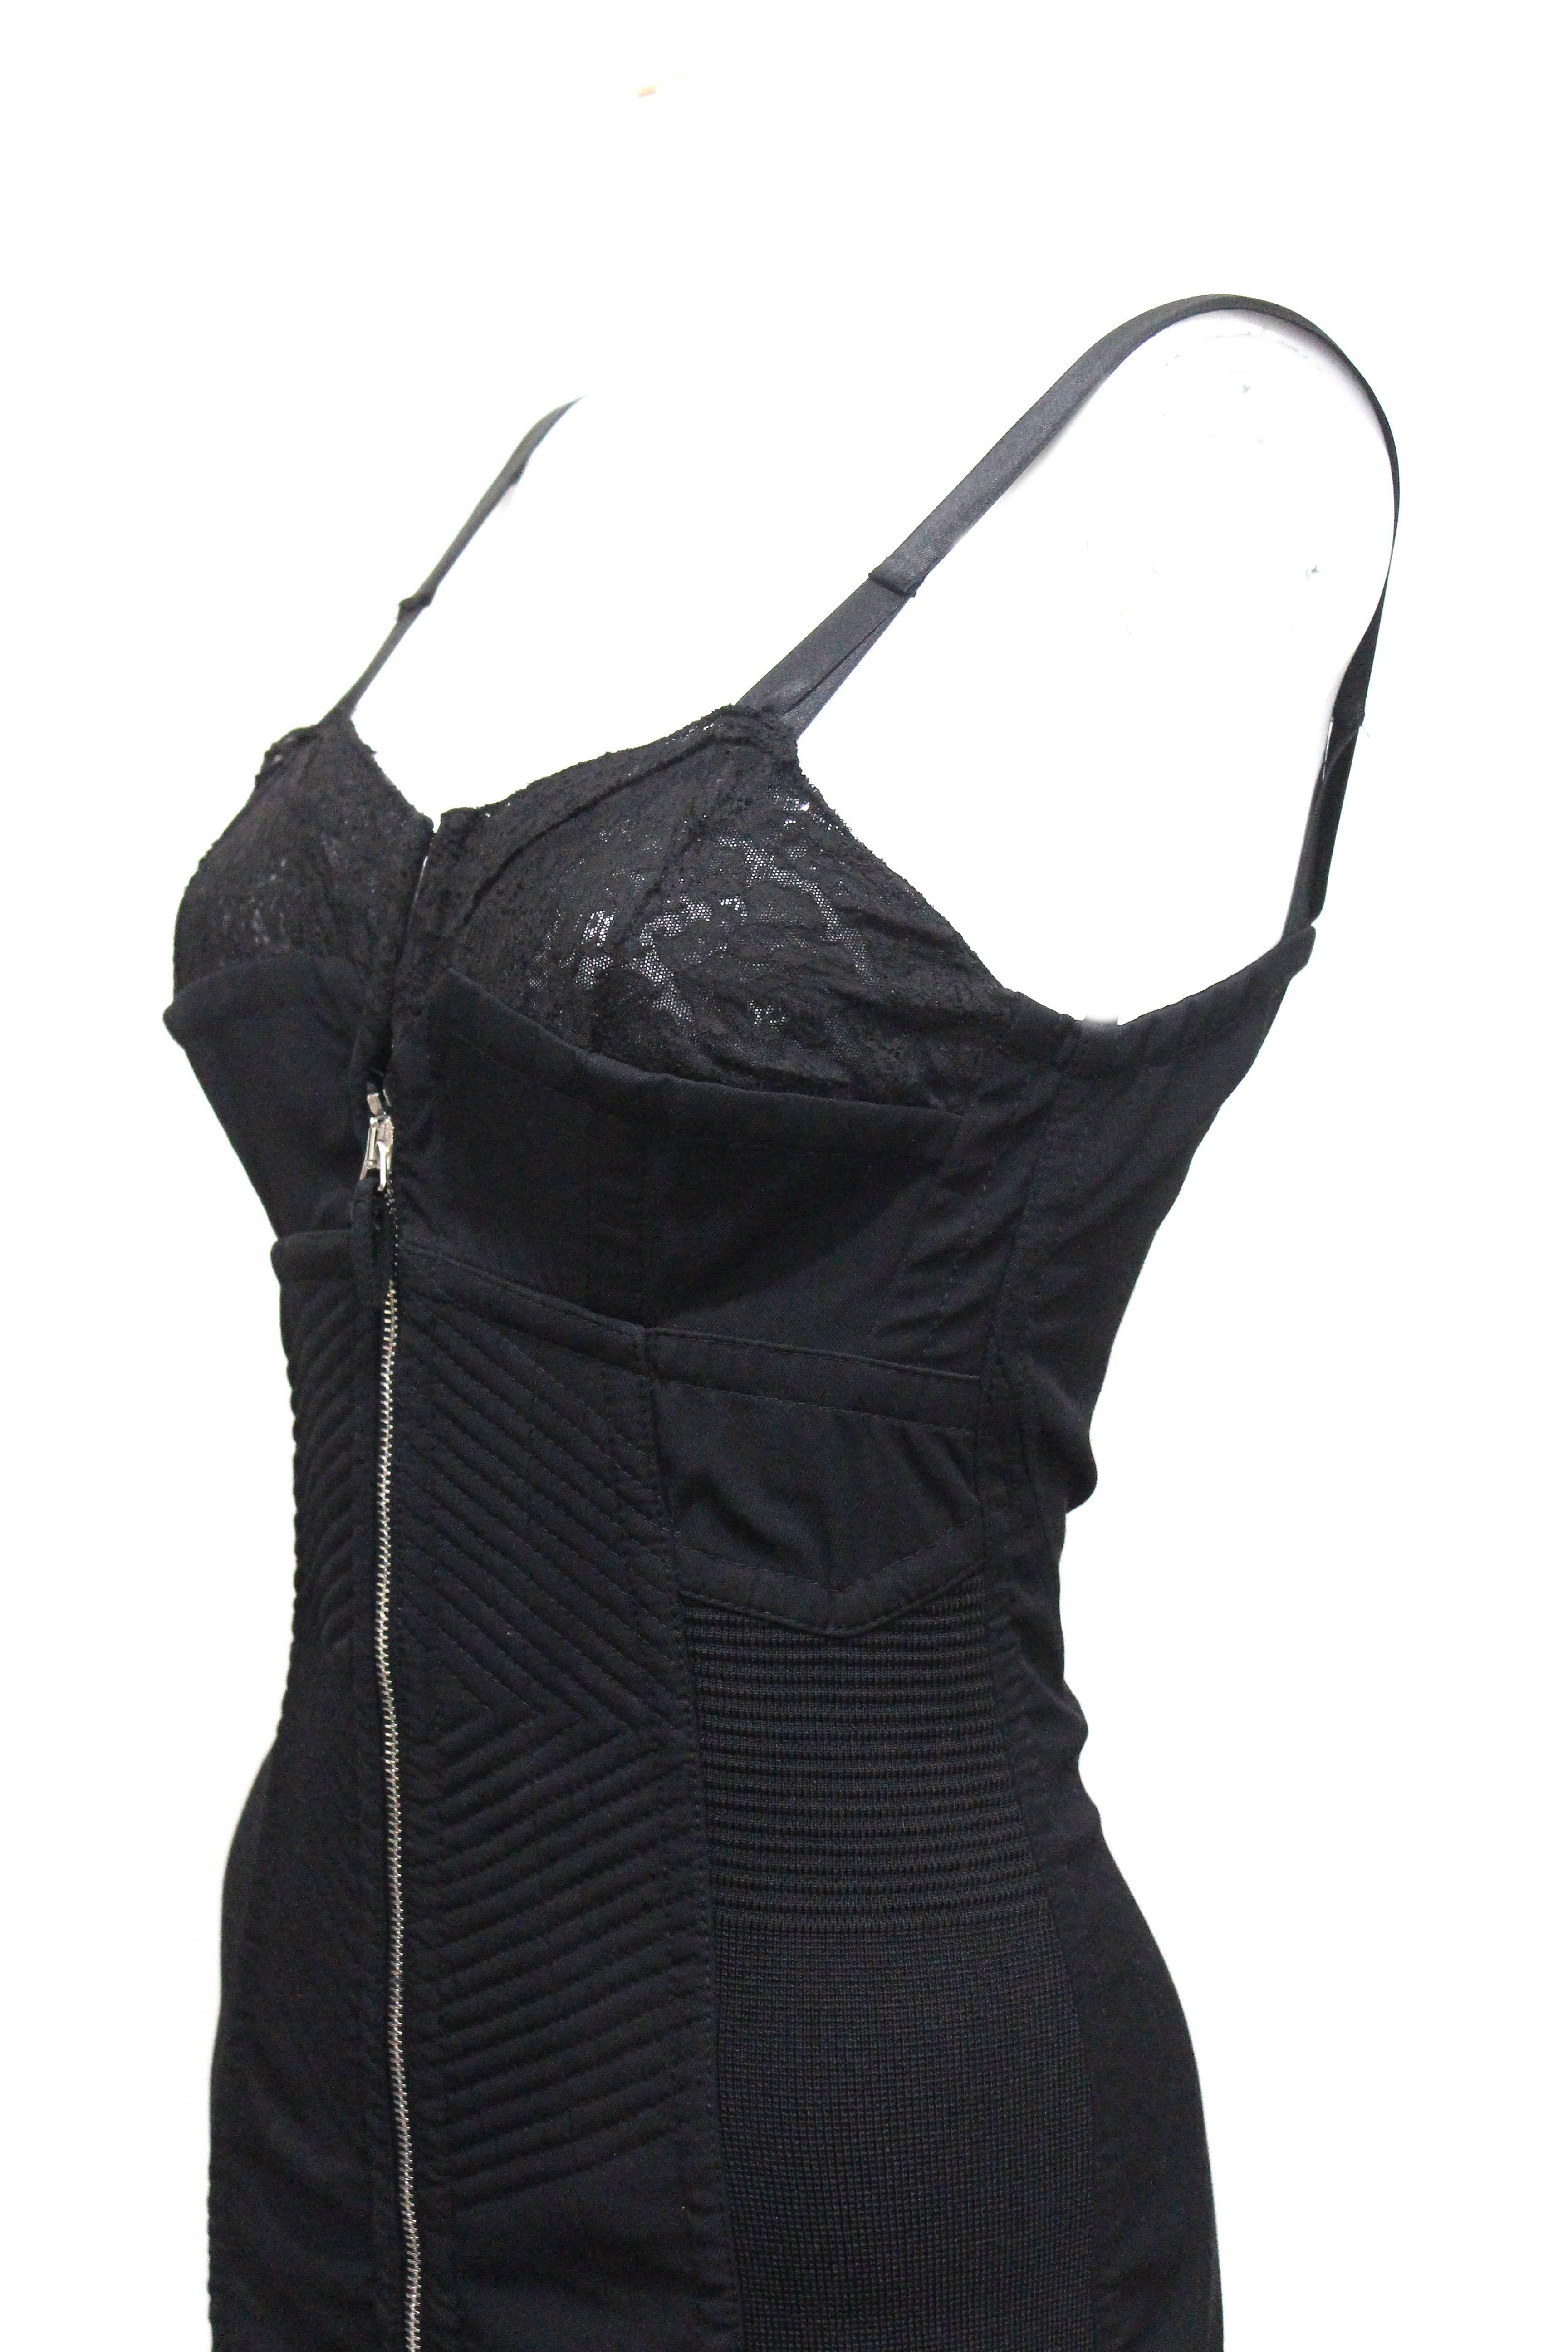 Black 1990s Important Jean Paul Gaultier lingerie style corset bra dress 